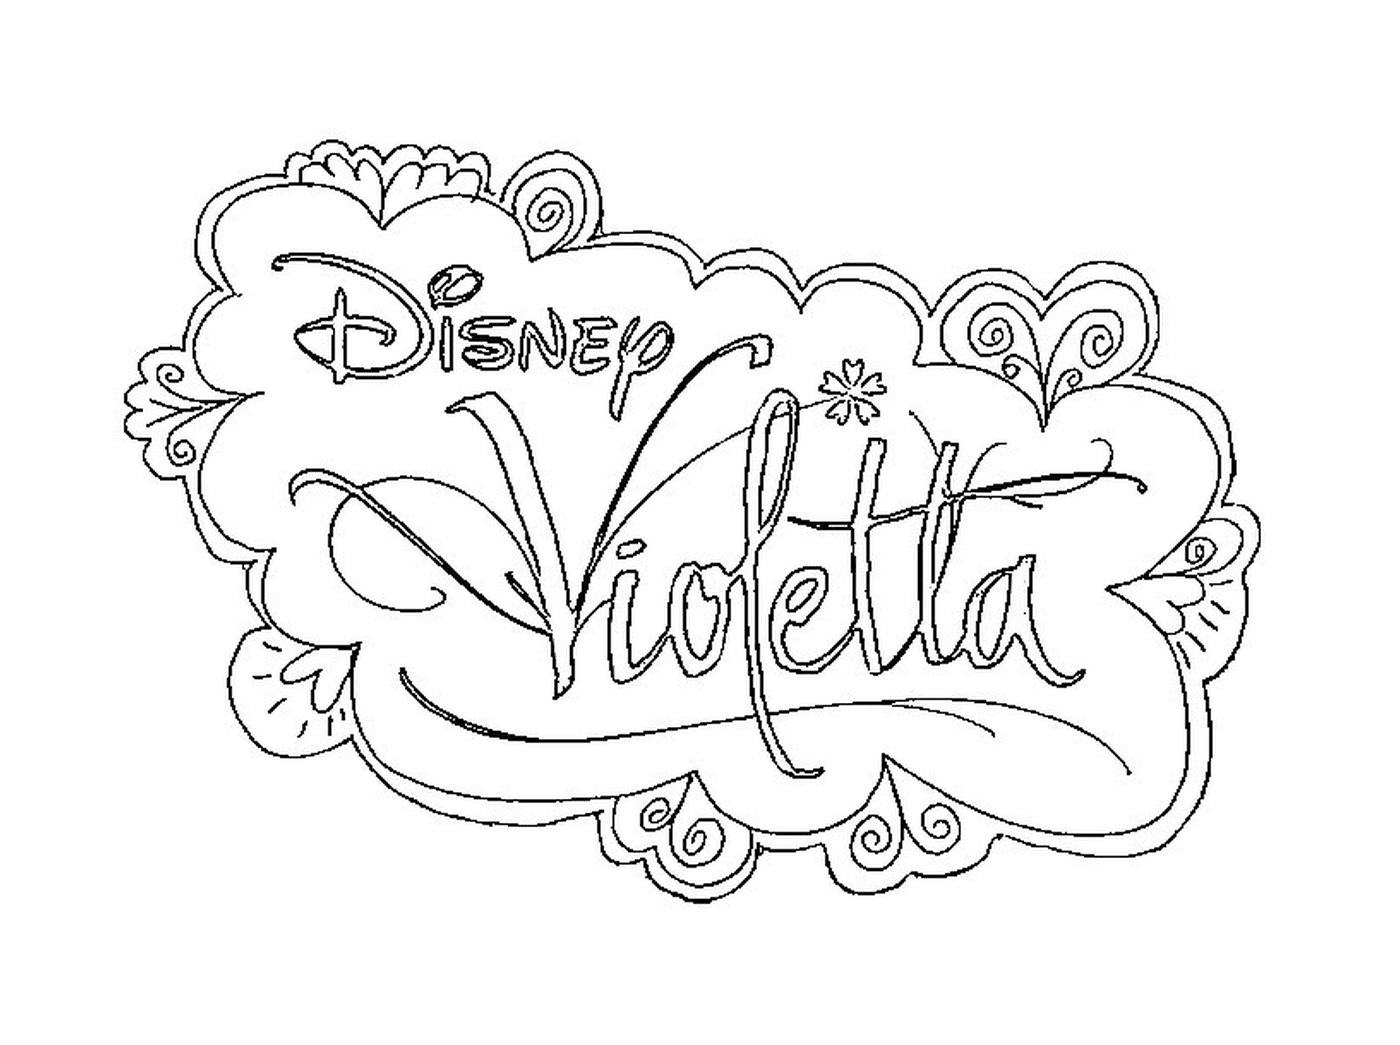  Disney Violetta logo 